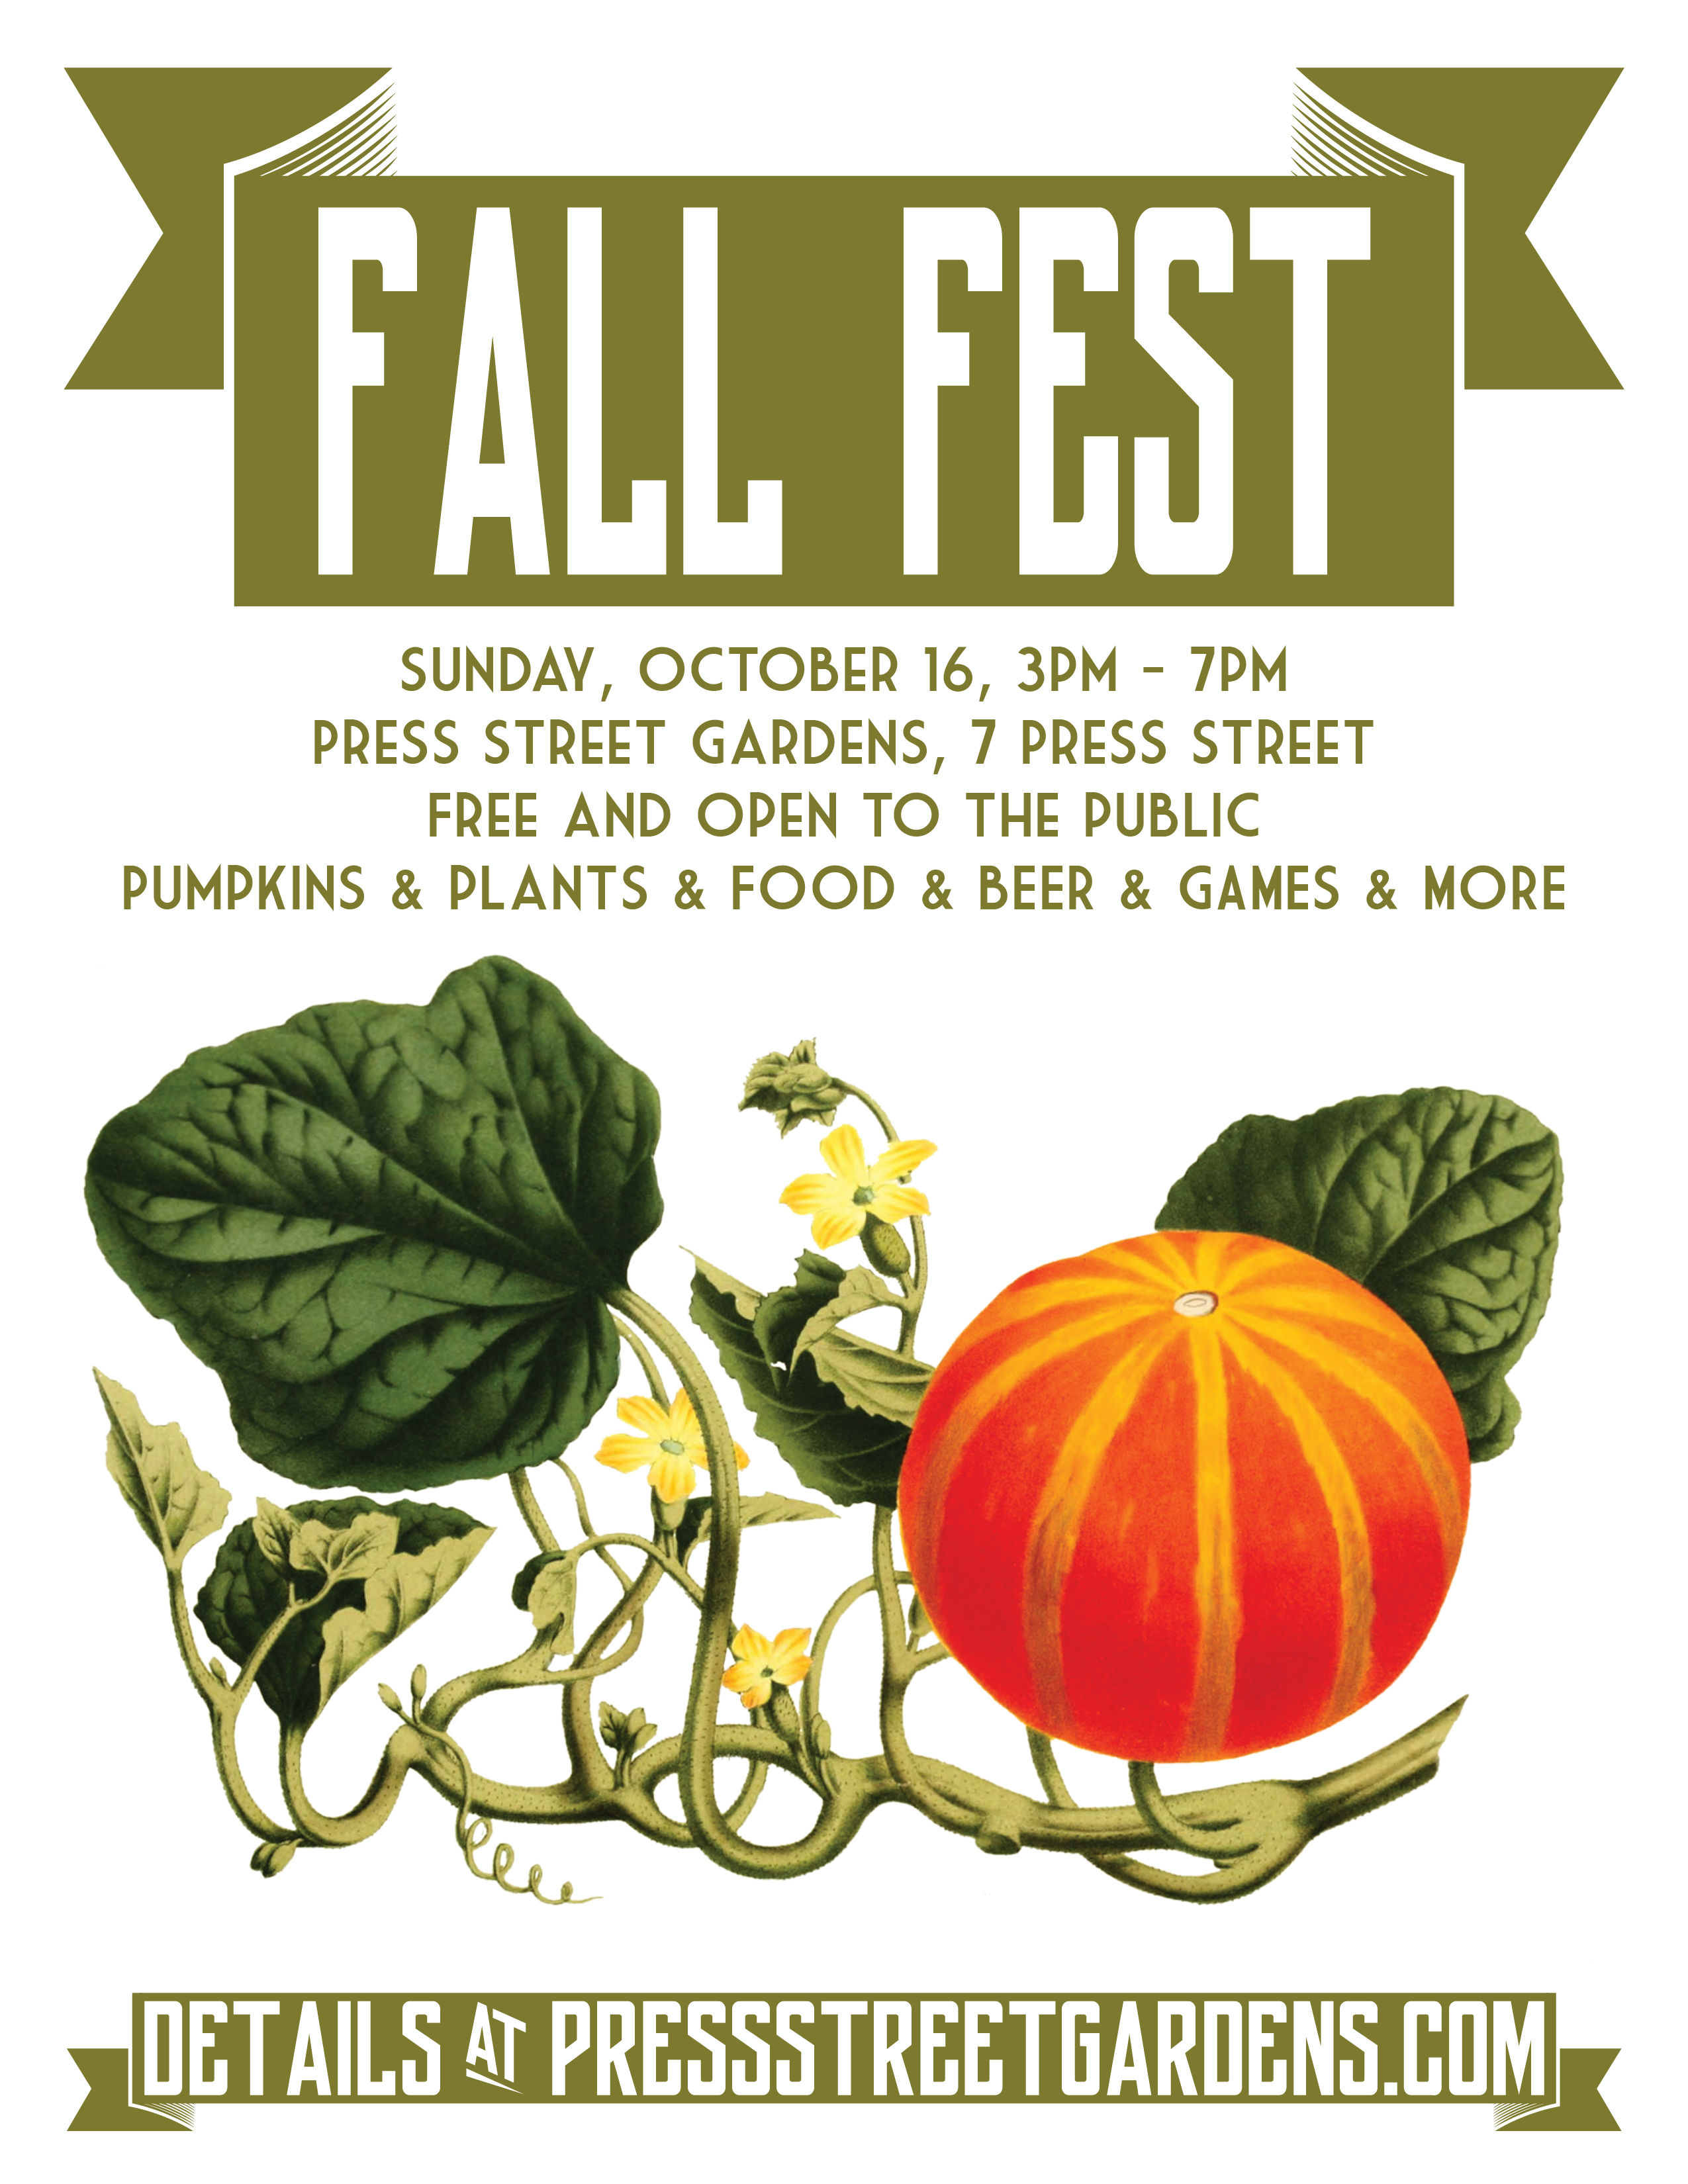 Sunday, October 16: Fall Fest